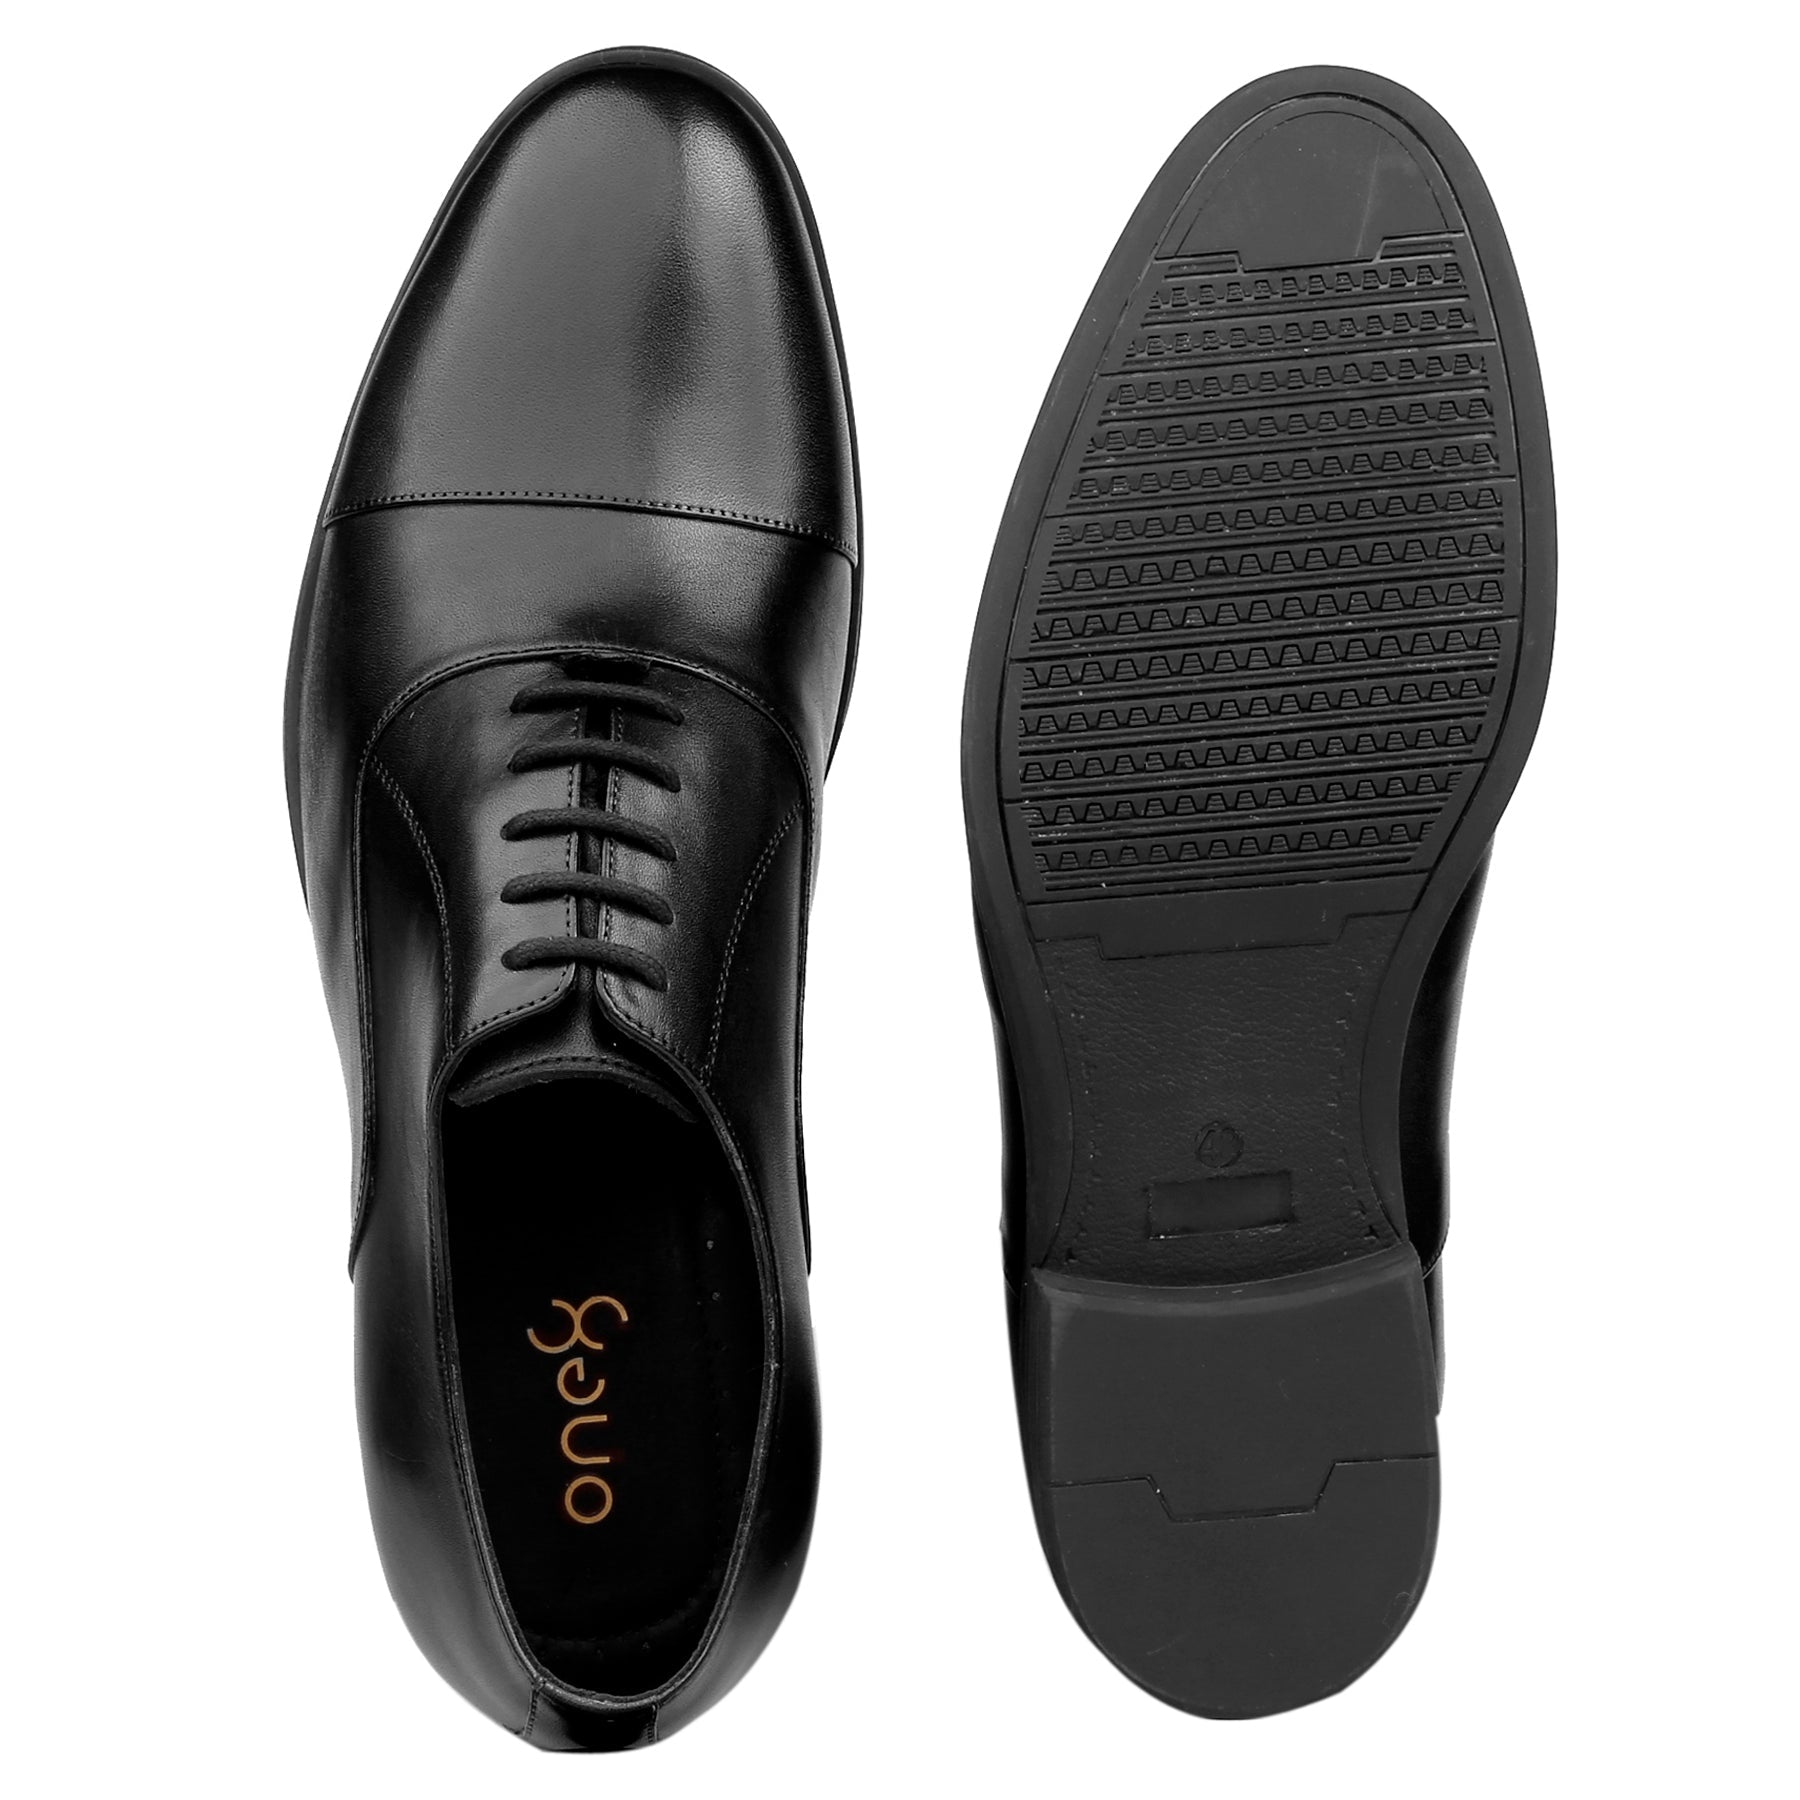 Footwear, Men Footwear, Black Oxfords